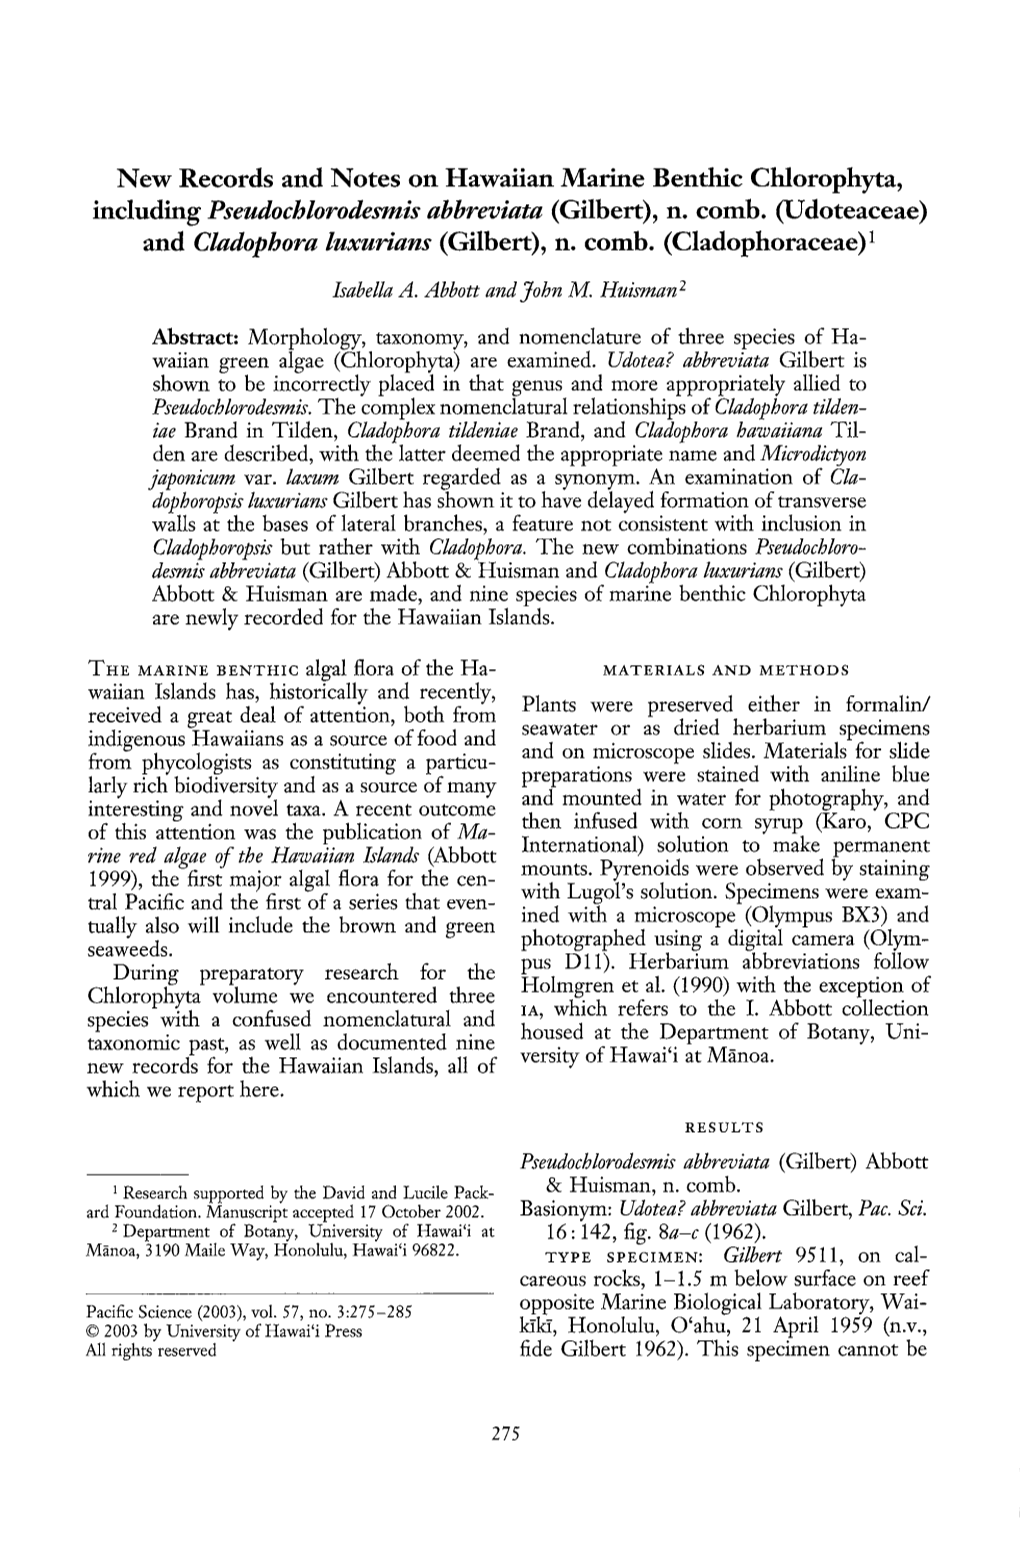 New Records and Notes on Hawaiian Marine Benthic Chlorophyta, Including Pseudochlorodesmis Abbreviata (Gilbert), N